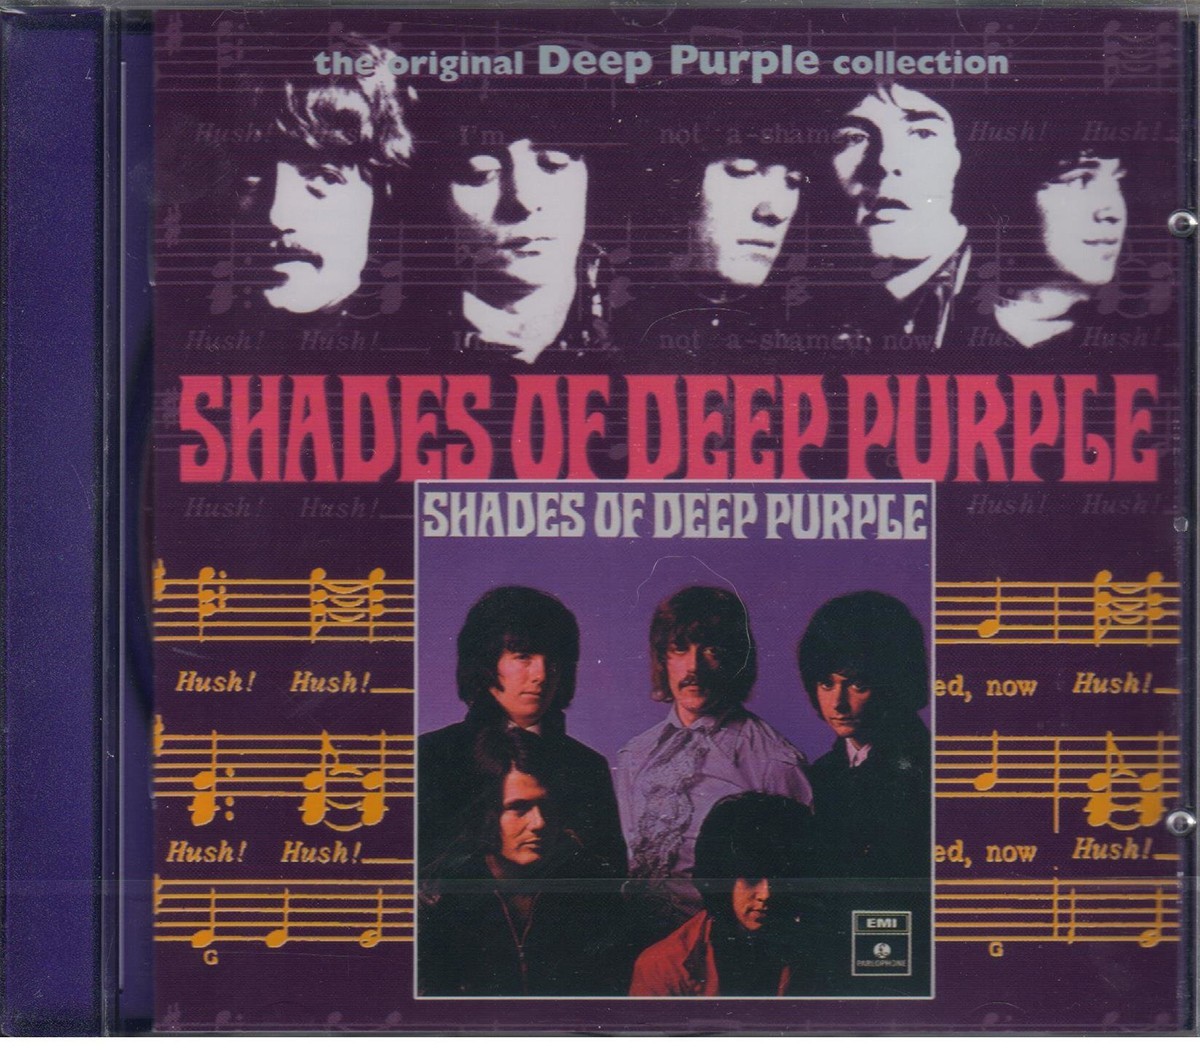 Обложка студийного альбома "Shades of Deep Purple", 1968